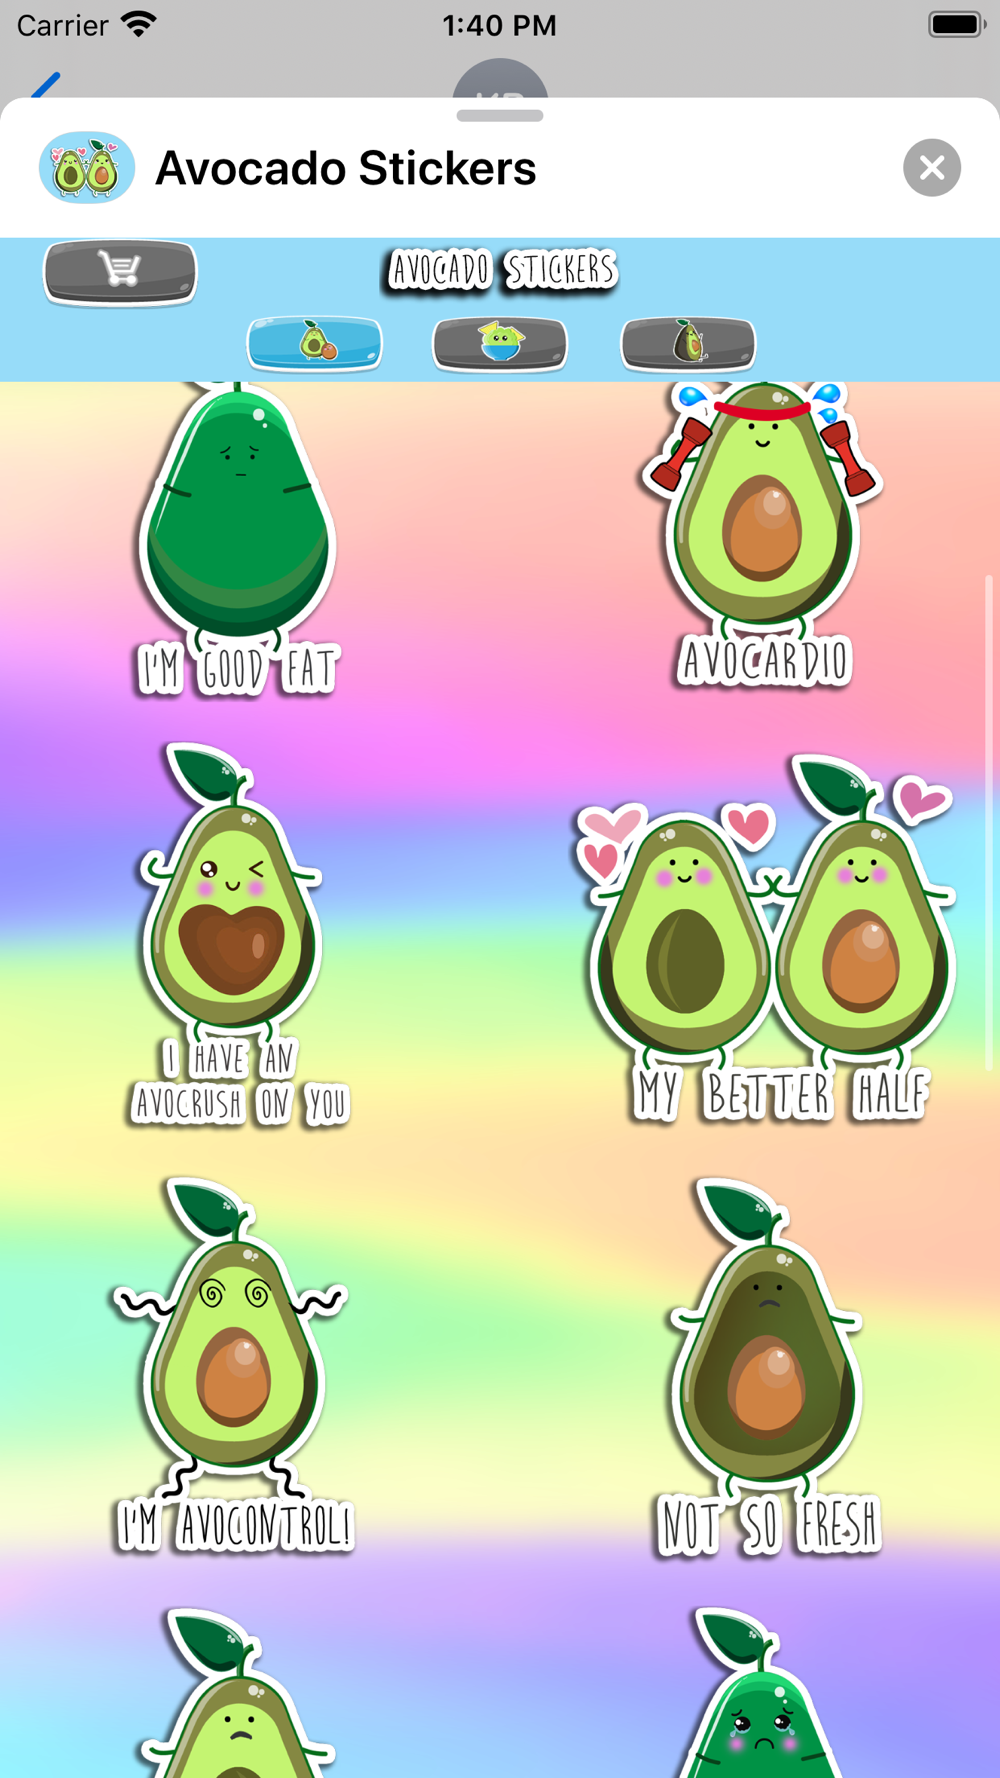 Iphone Avocado Wallpapers